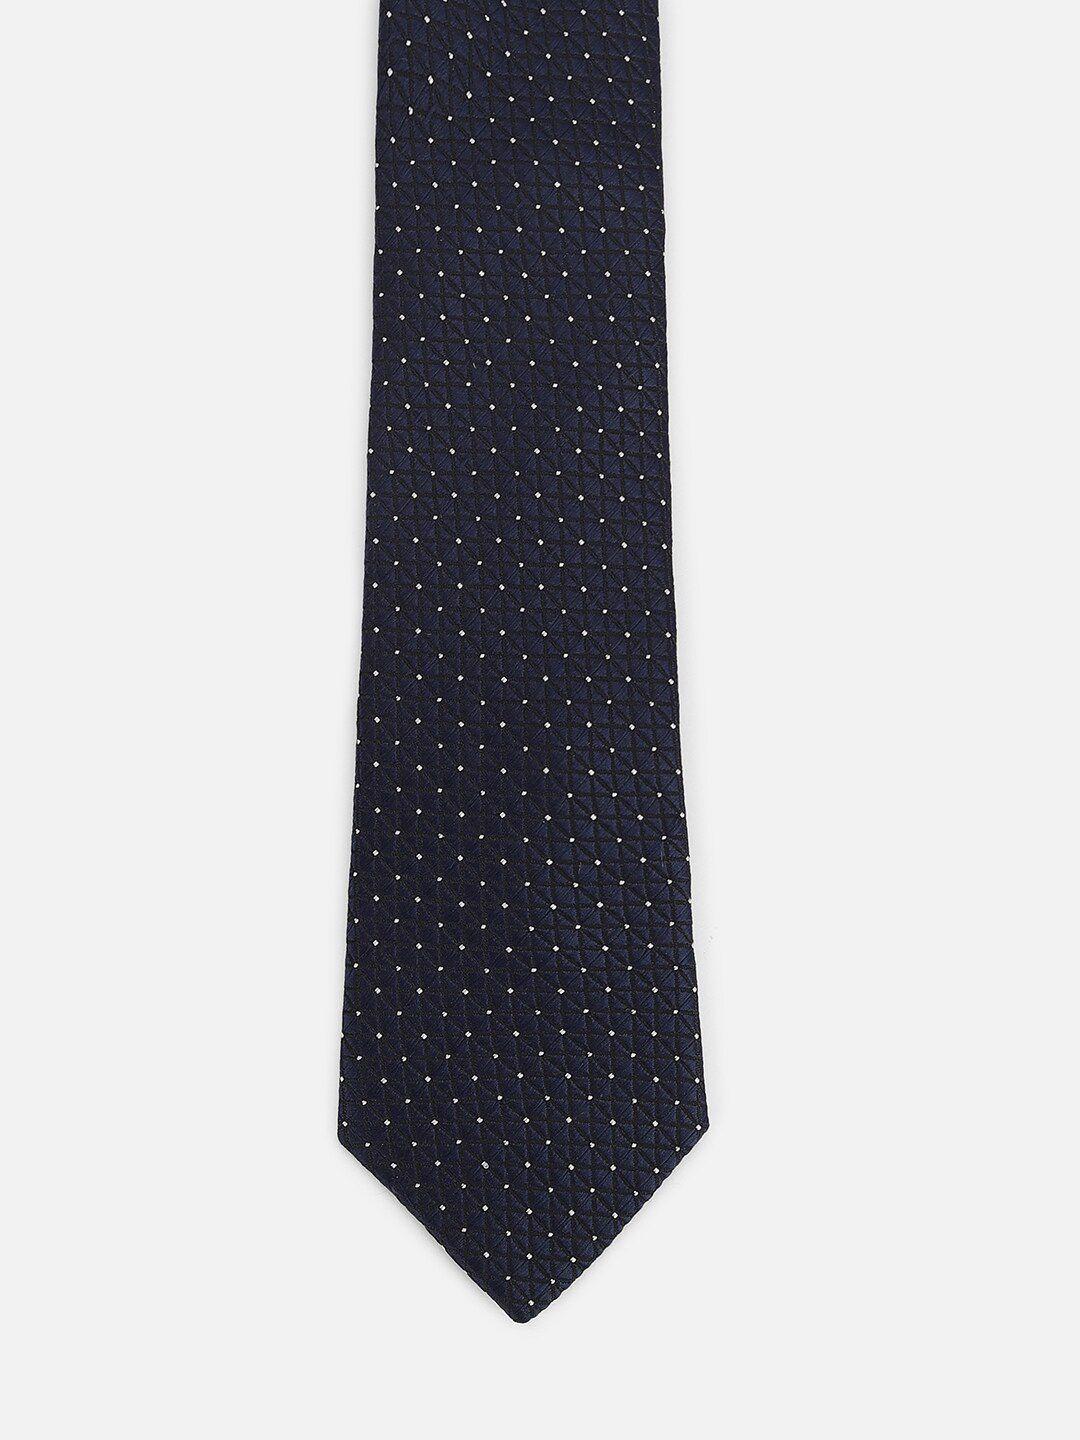 allen solly geometric woven design formalbroad tie